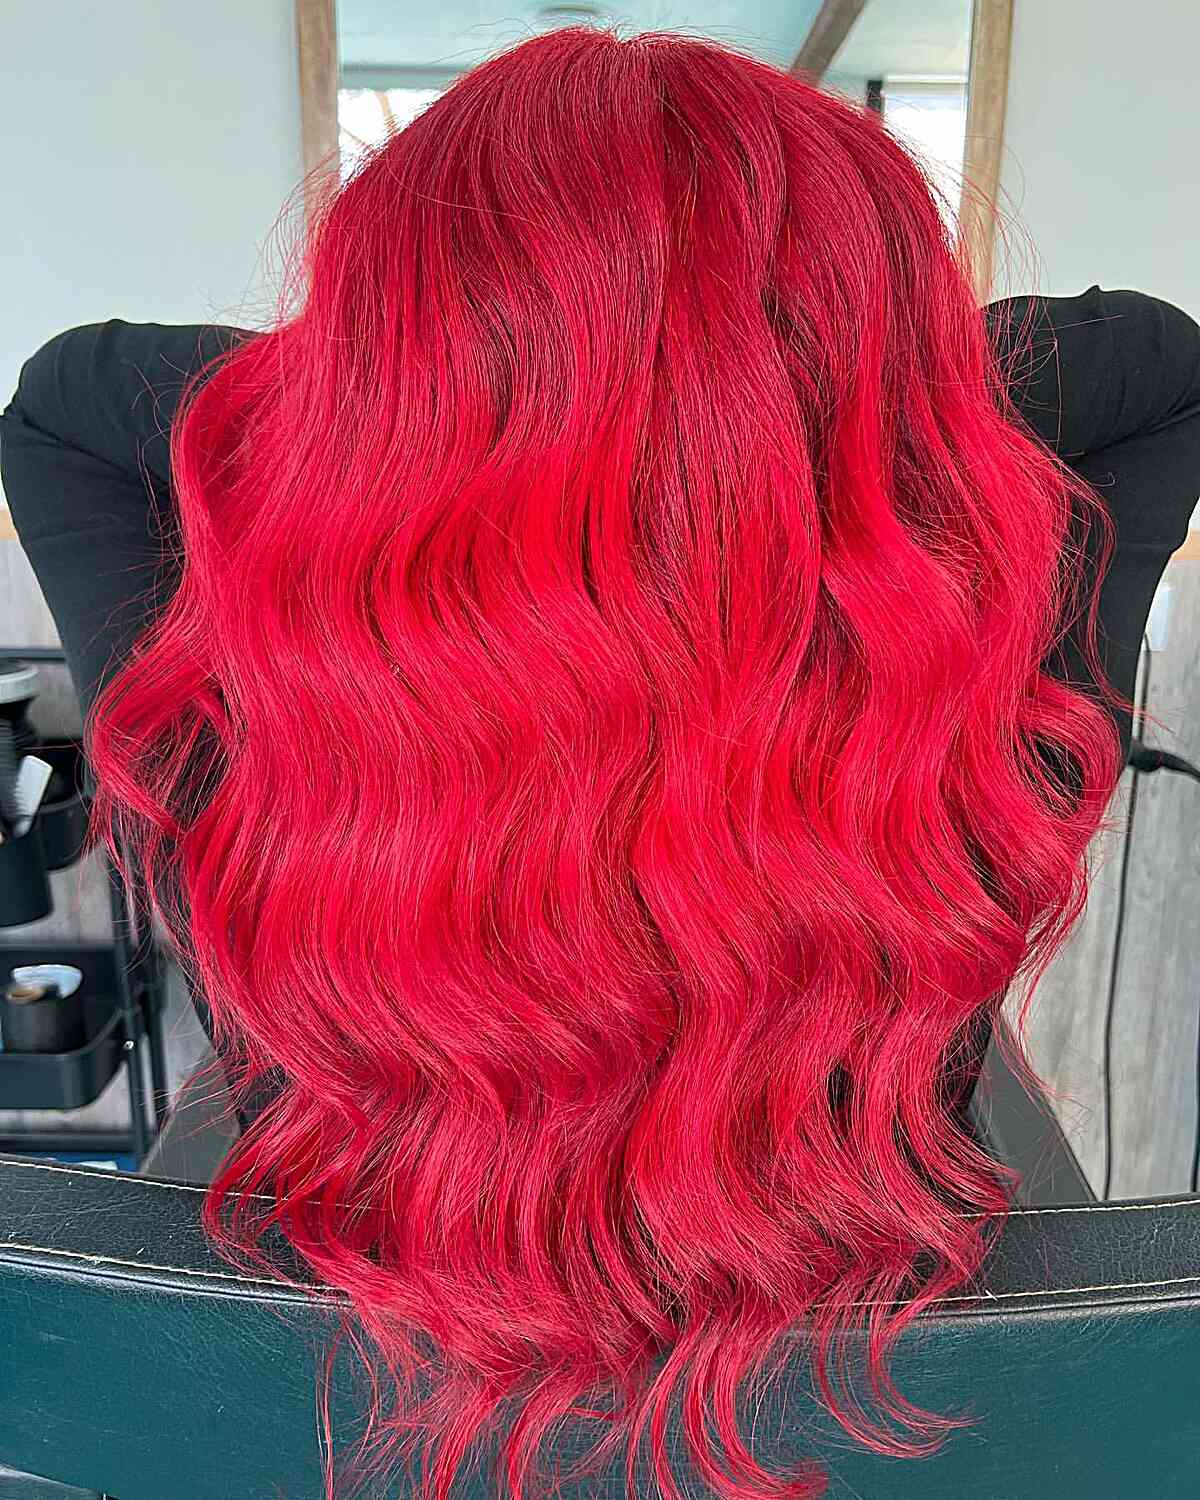 Aggregate 85+ bright red hair super hot